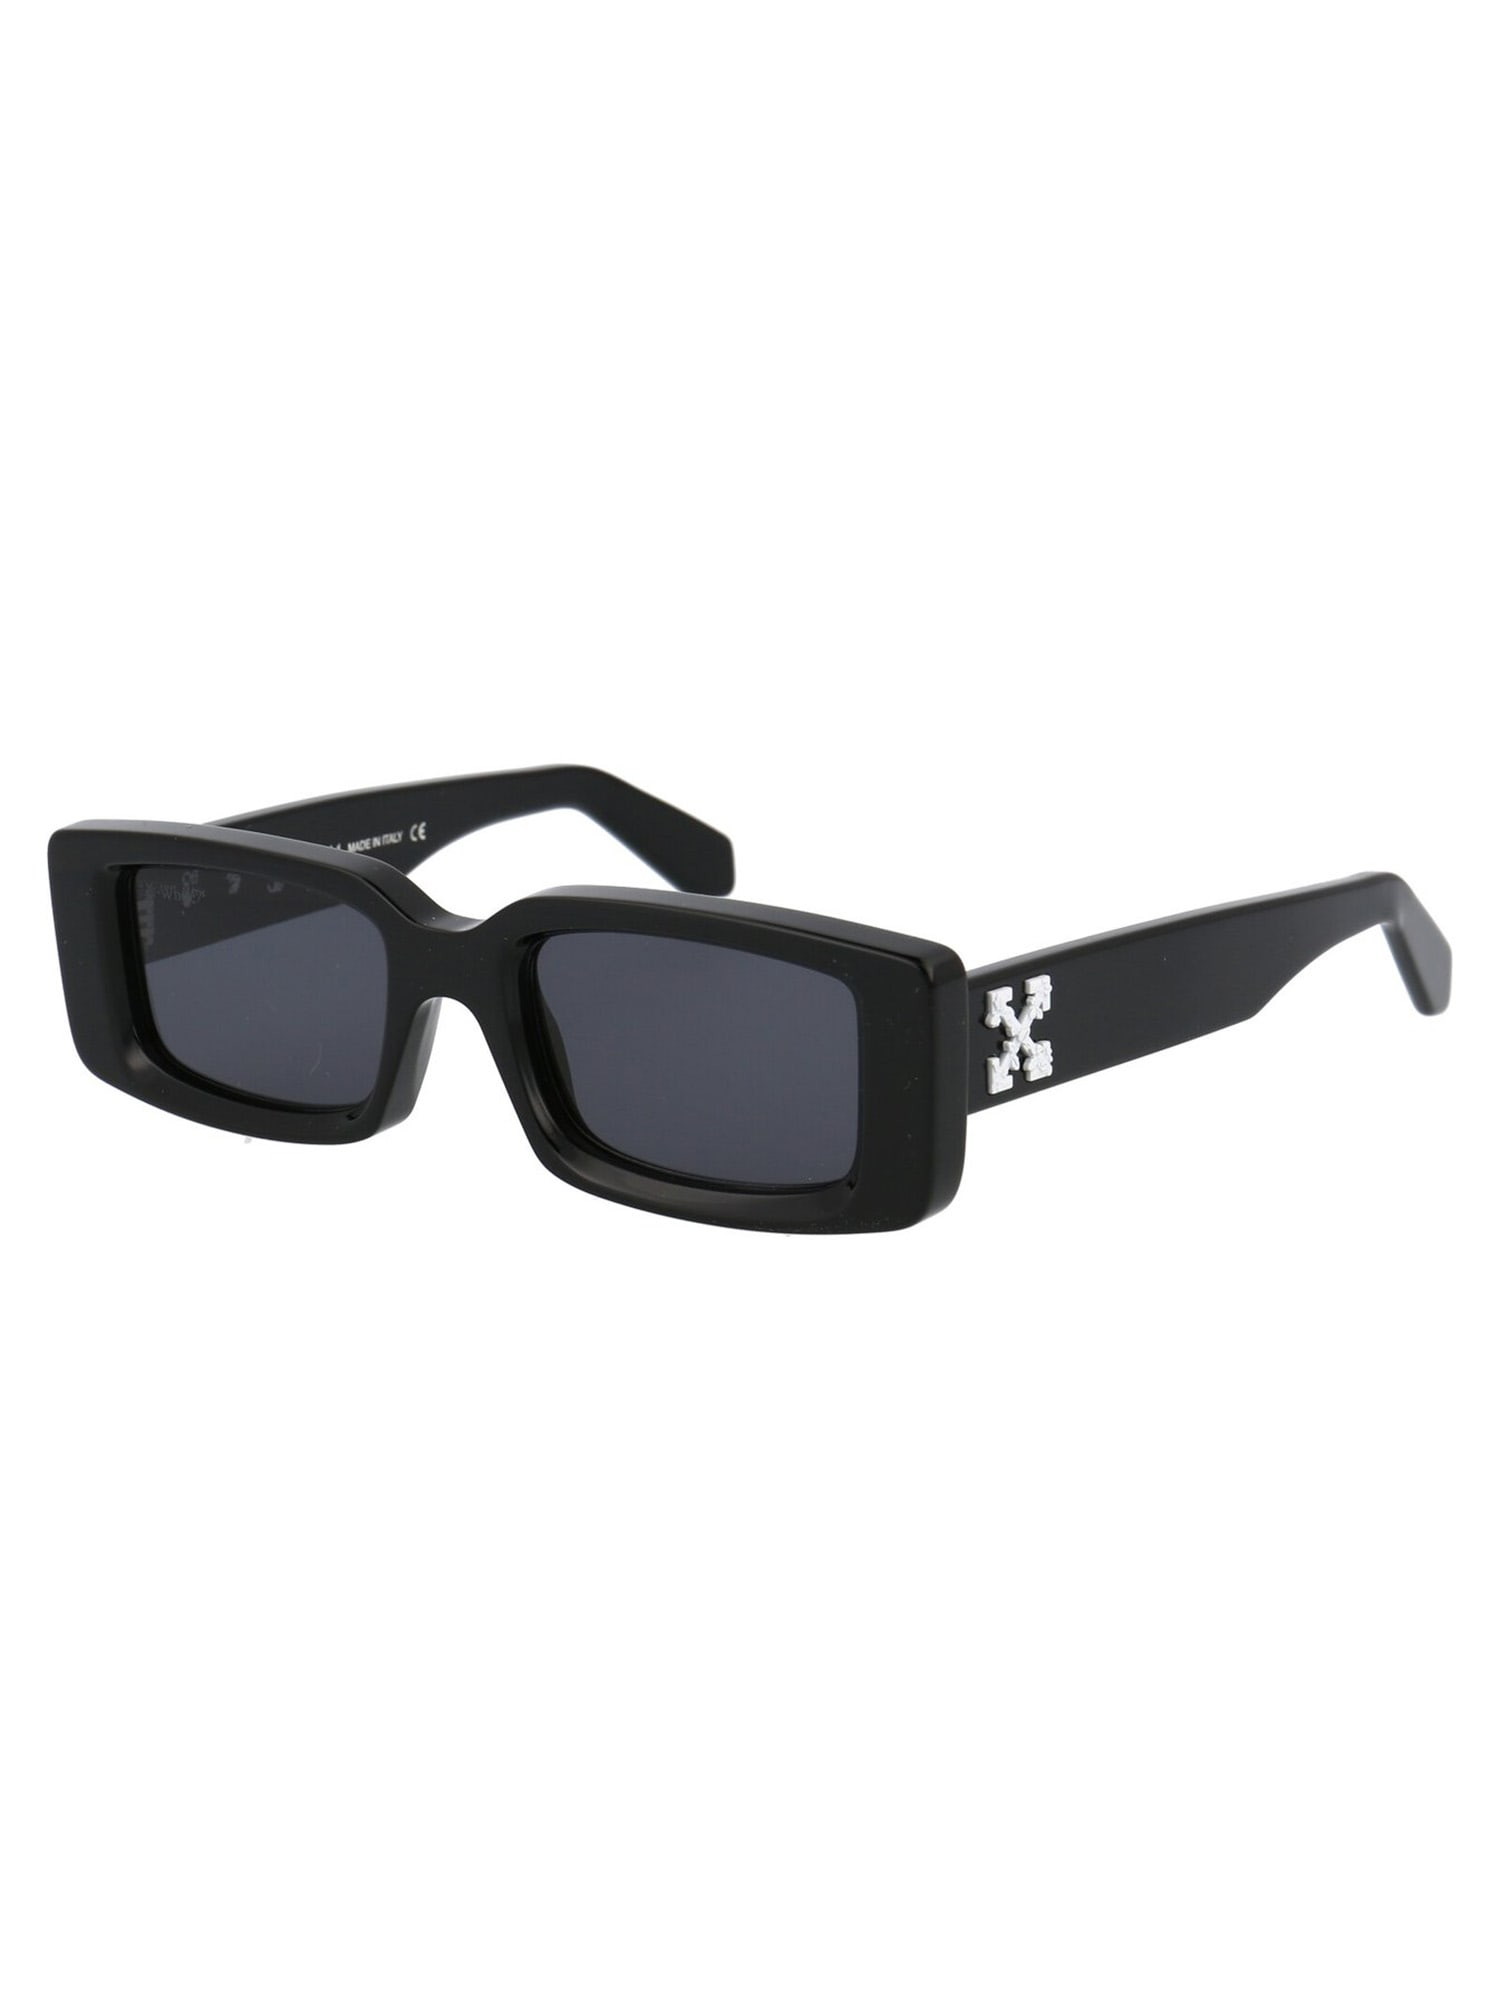 Off-White ARTHUR SUNGLASSES Sunglasses